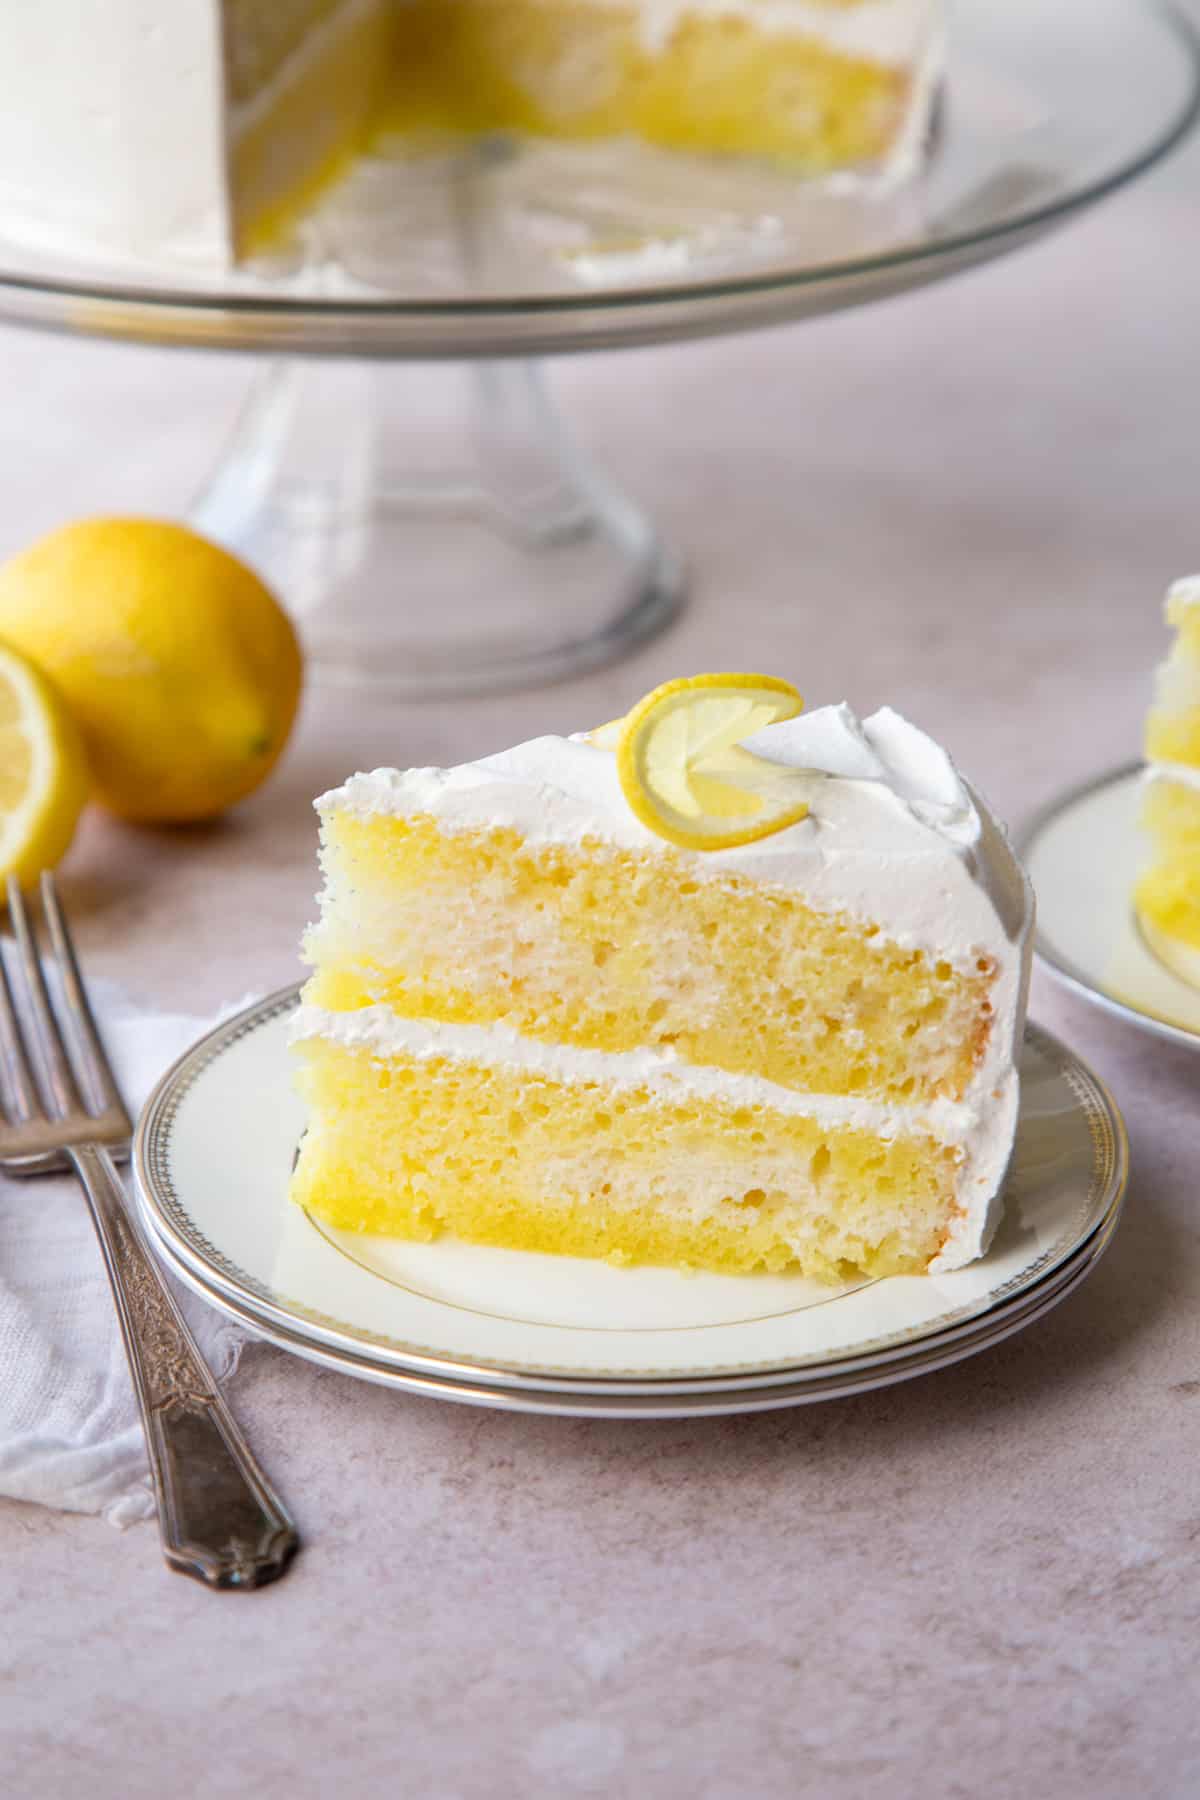 slice of layered lemon poke cake made with lemon gelatin on a white plate.